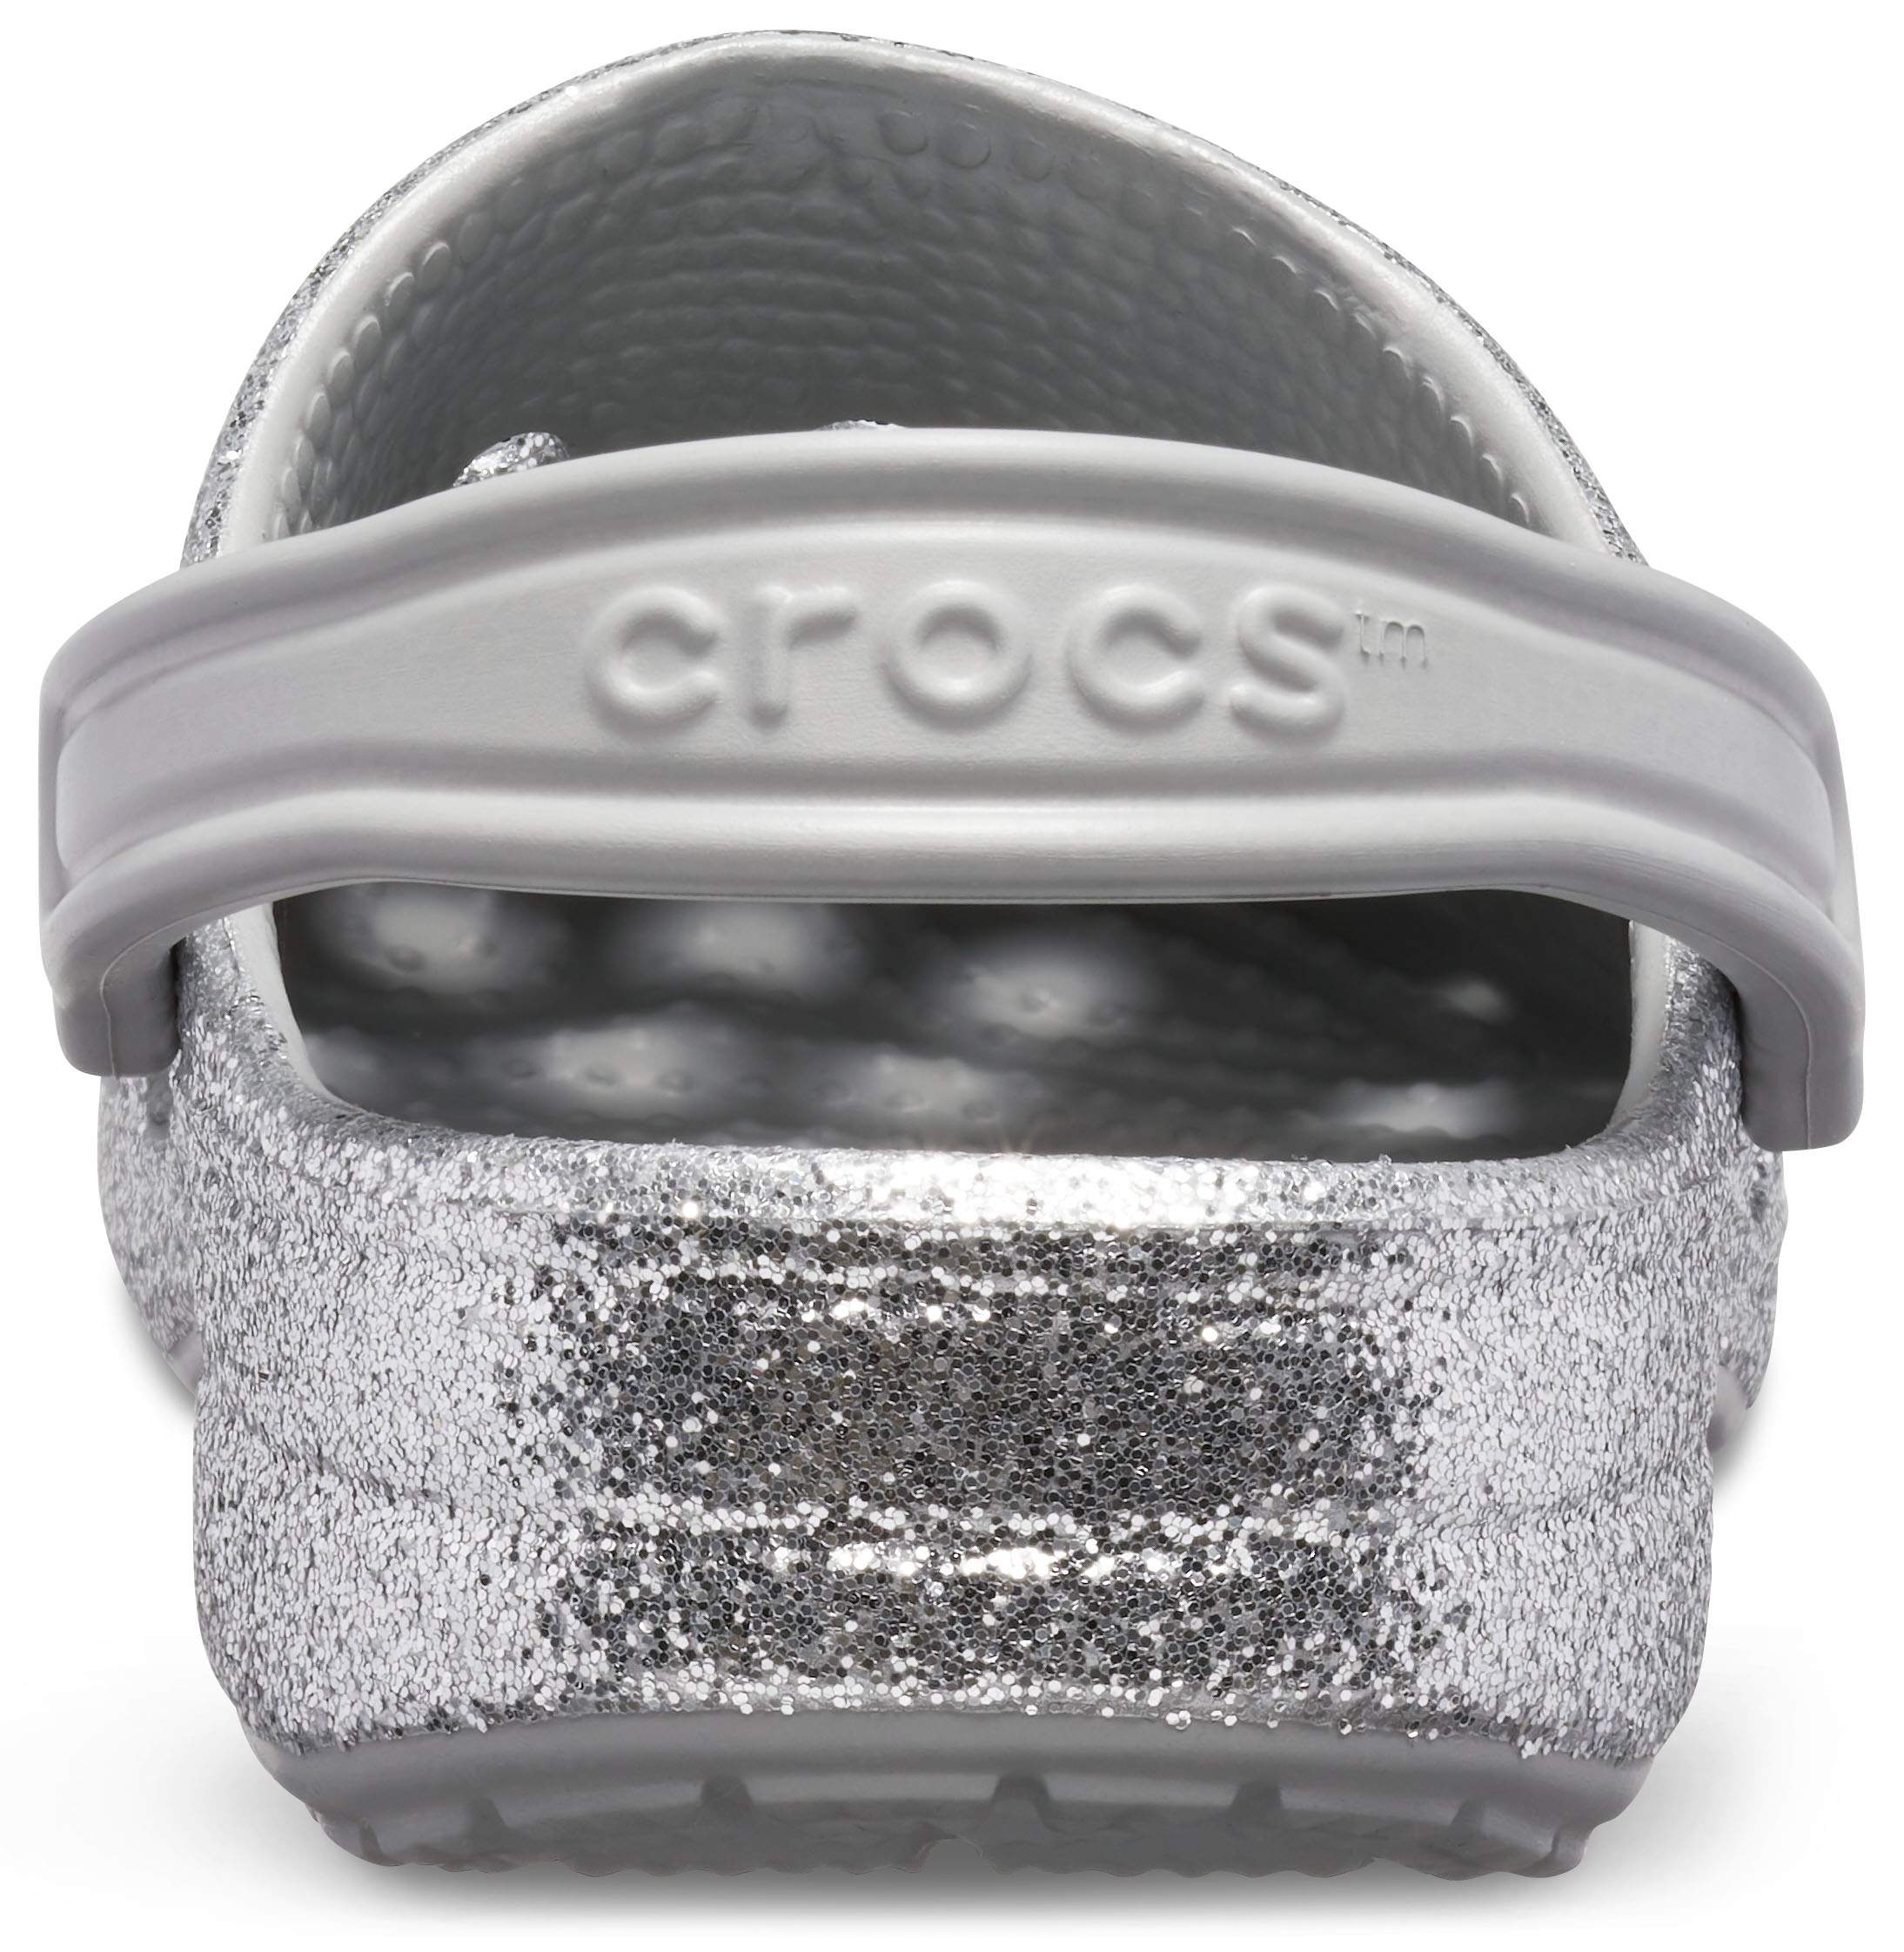 crocs glitter clogs